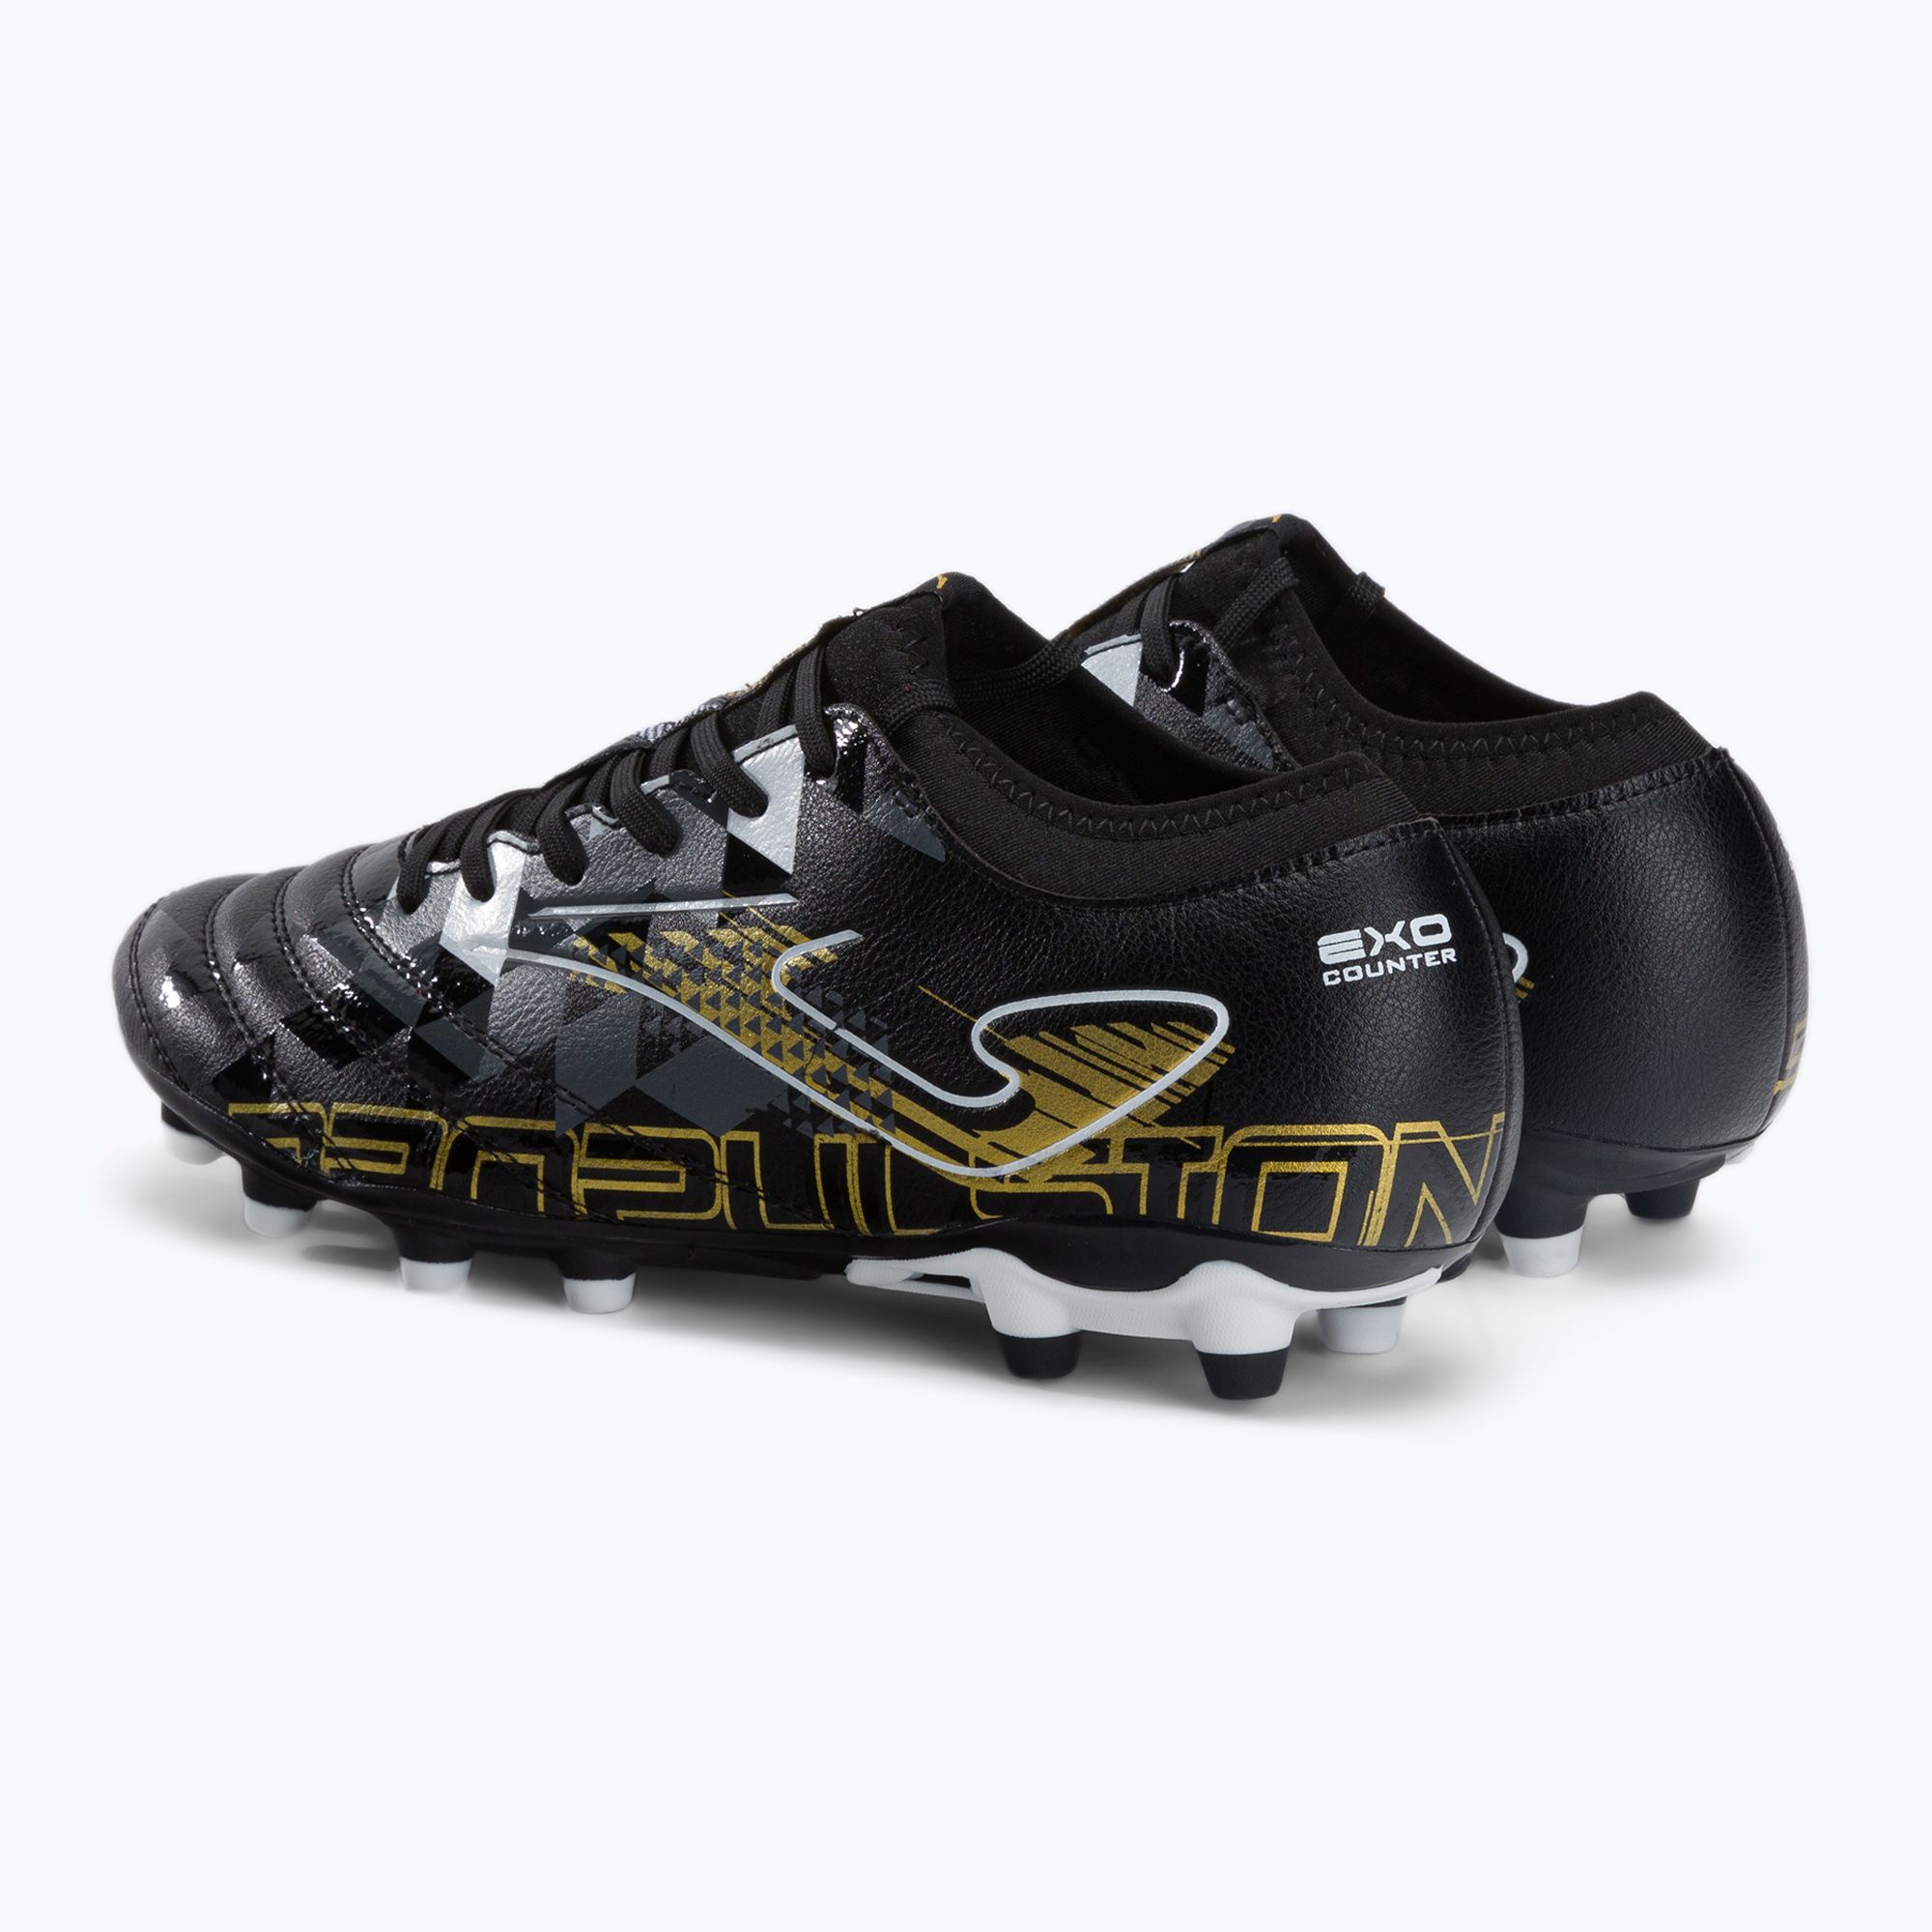 Buty piłkarskie męskie Joma Propulsion FG black zdjęcie nr 3